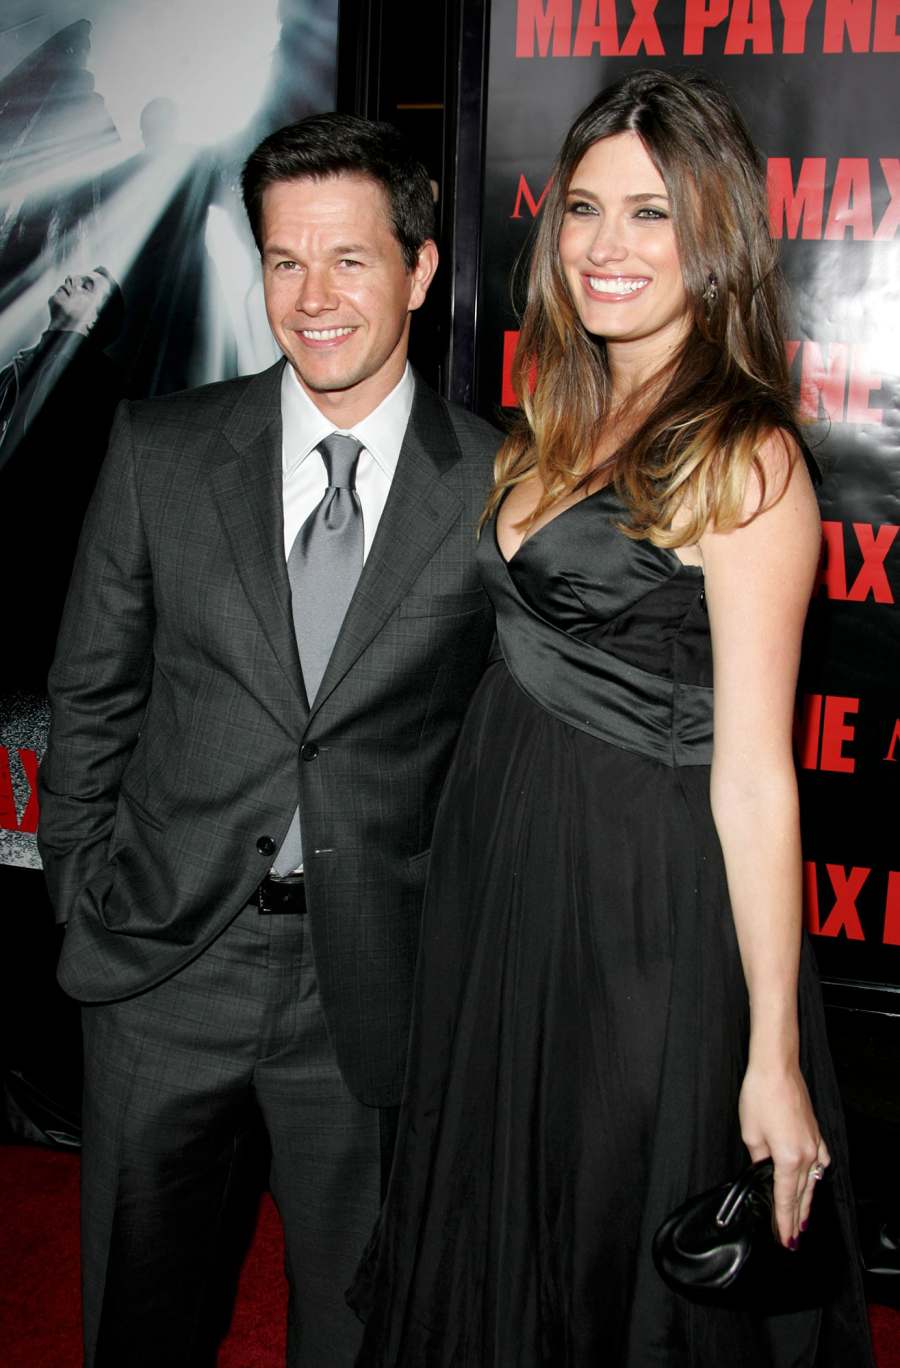 2008 Mark Wahlberg and Rhea Durham Relationship Timeline